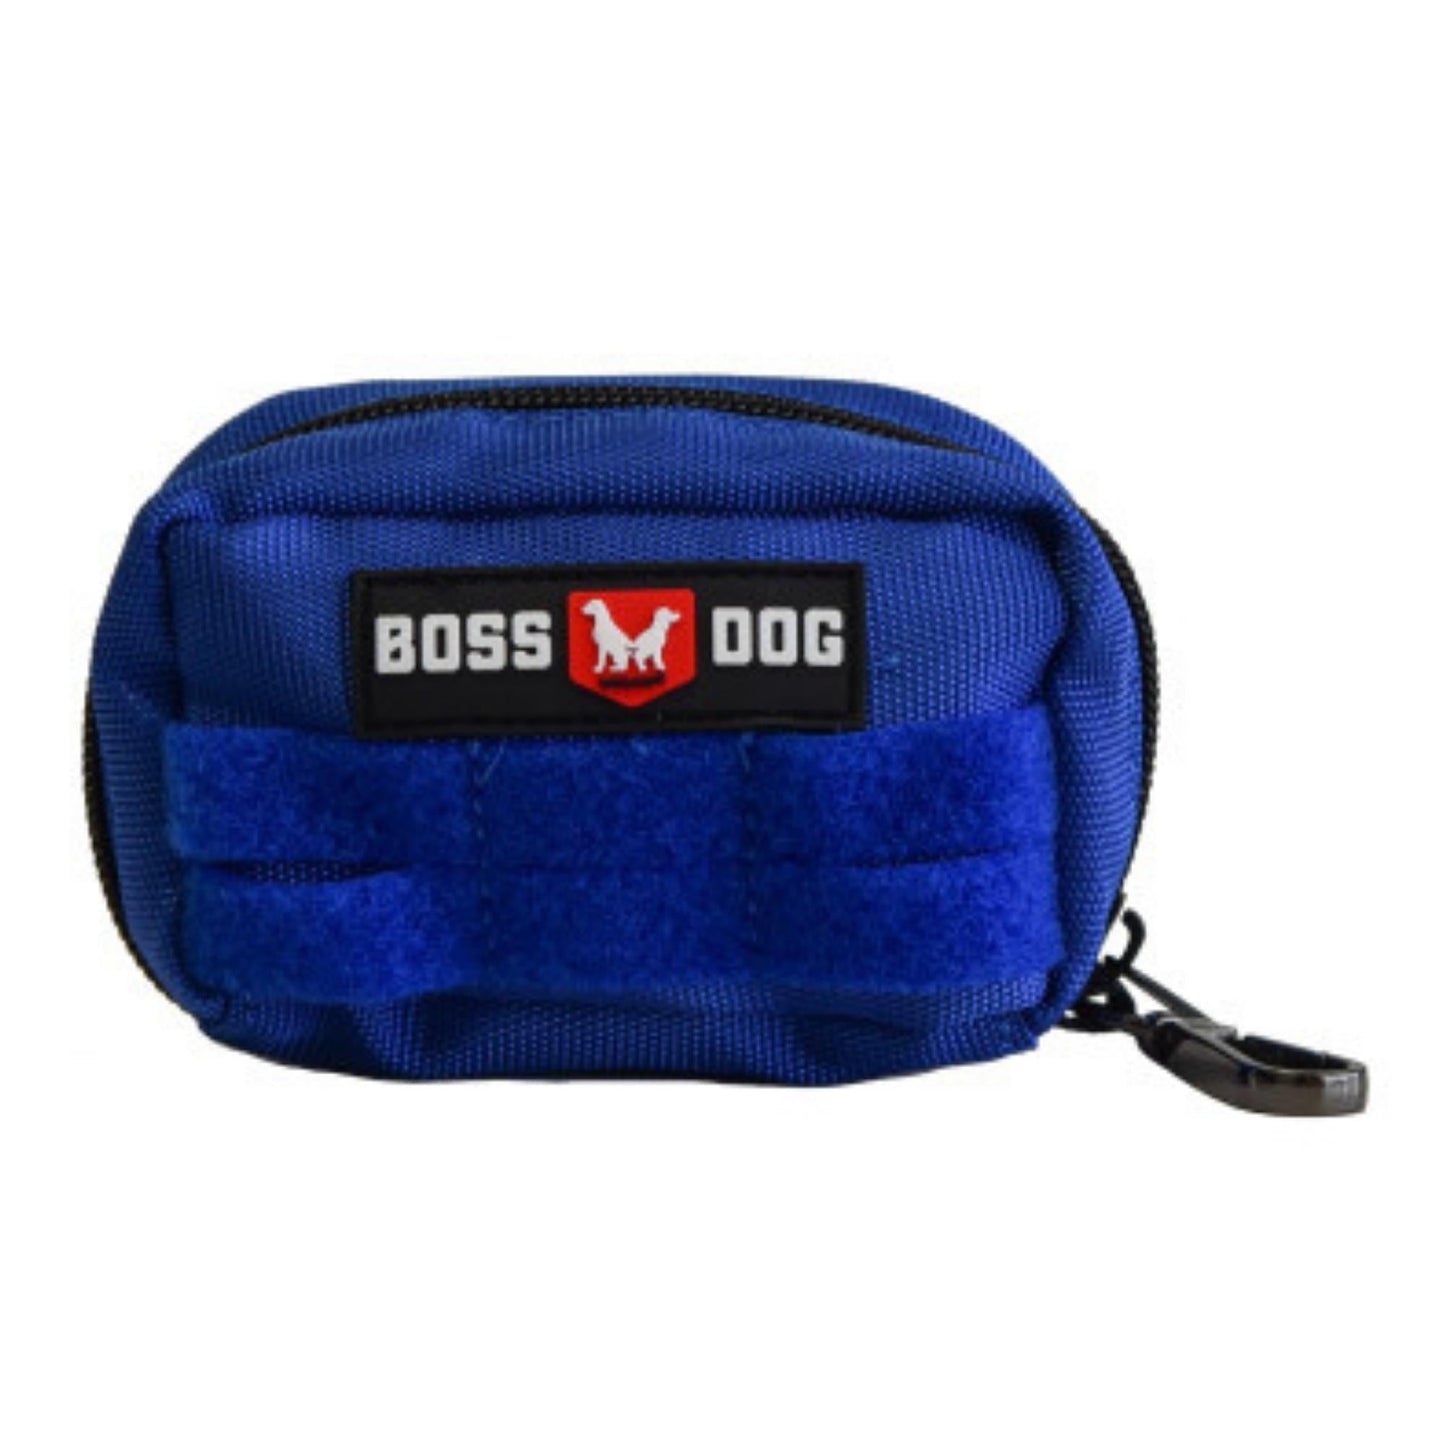 Boss Dog Tactical Molle Harness Bag Blue, 1ea/Large